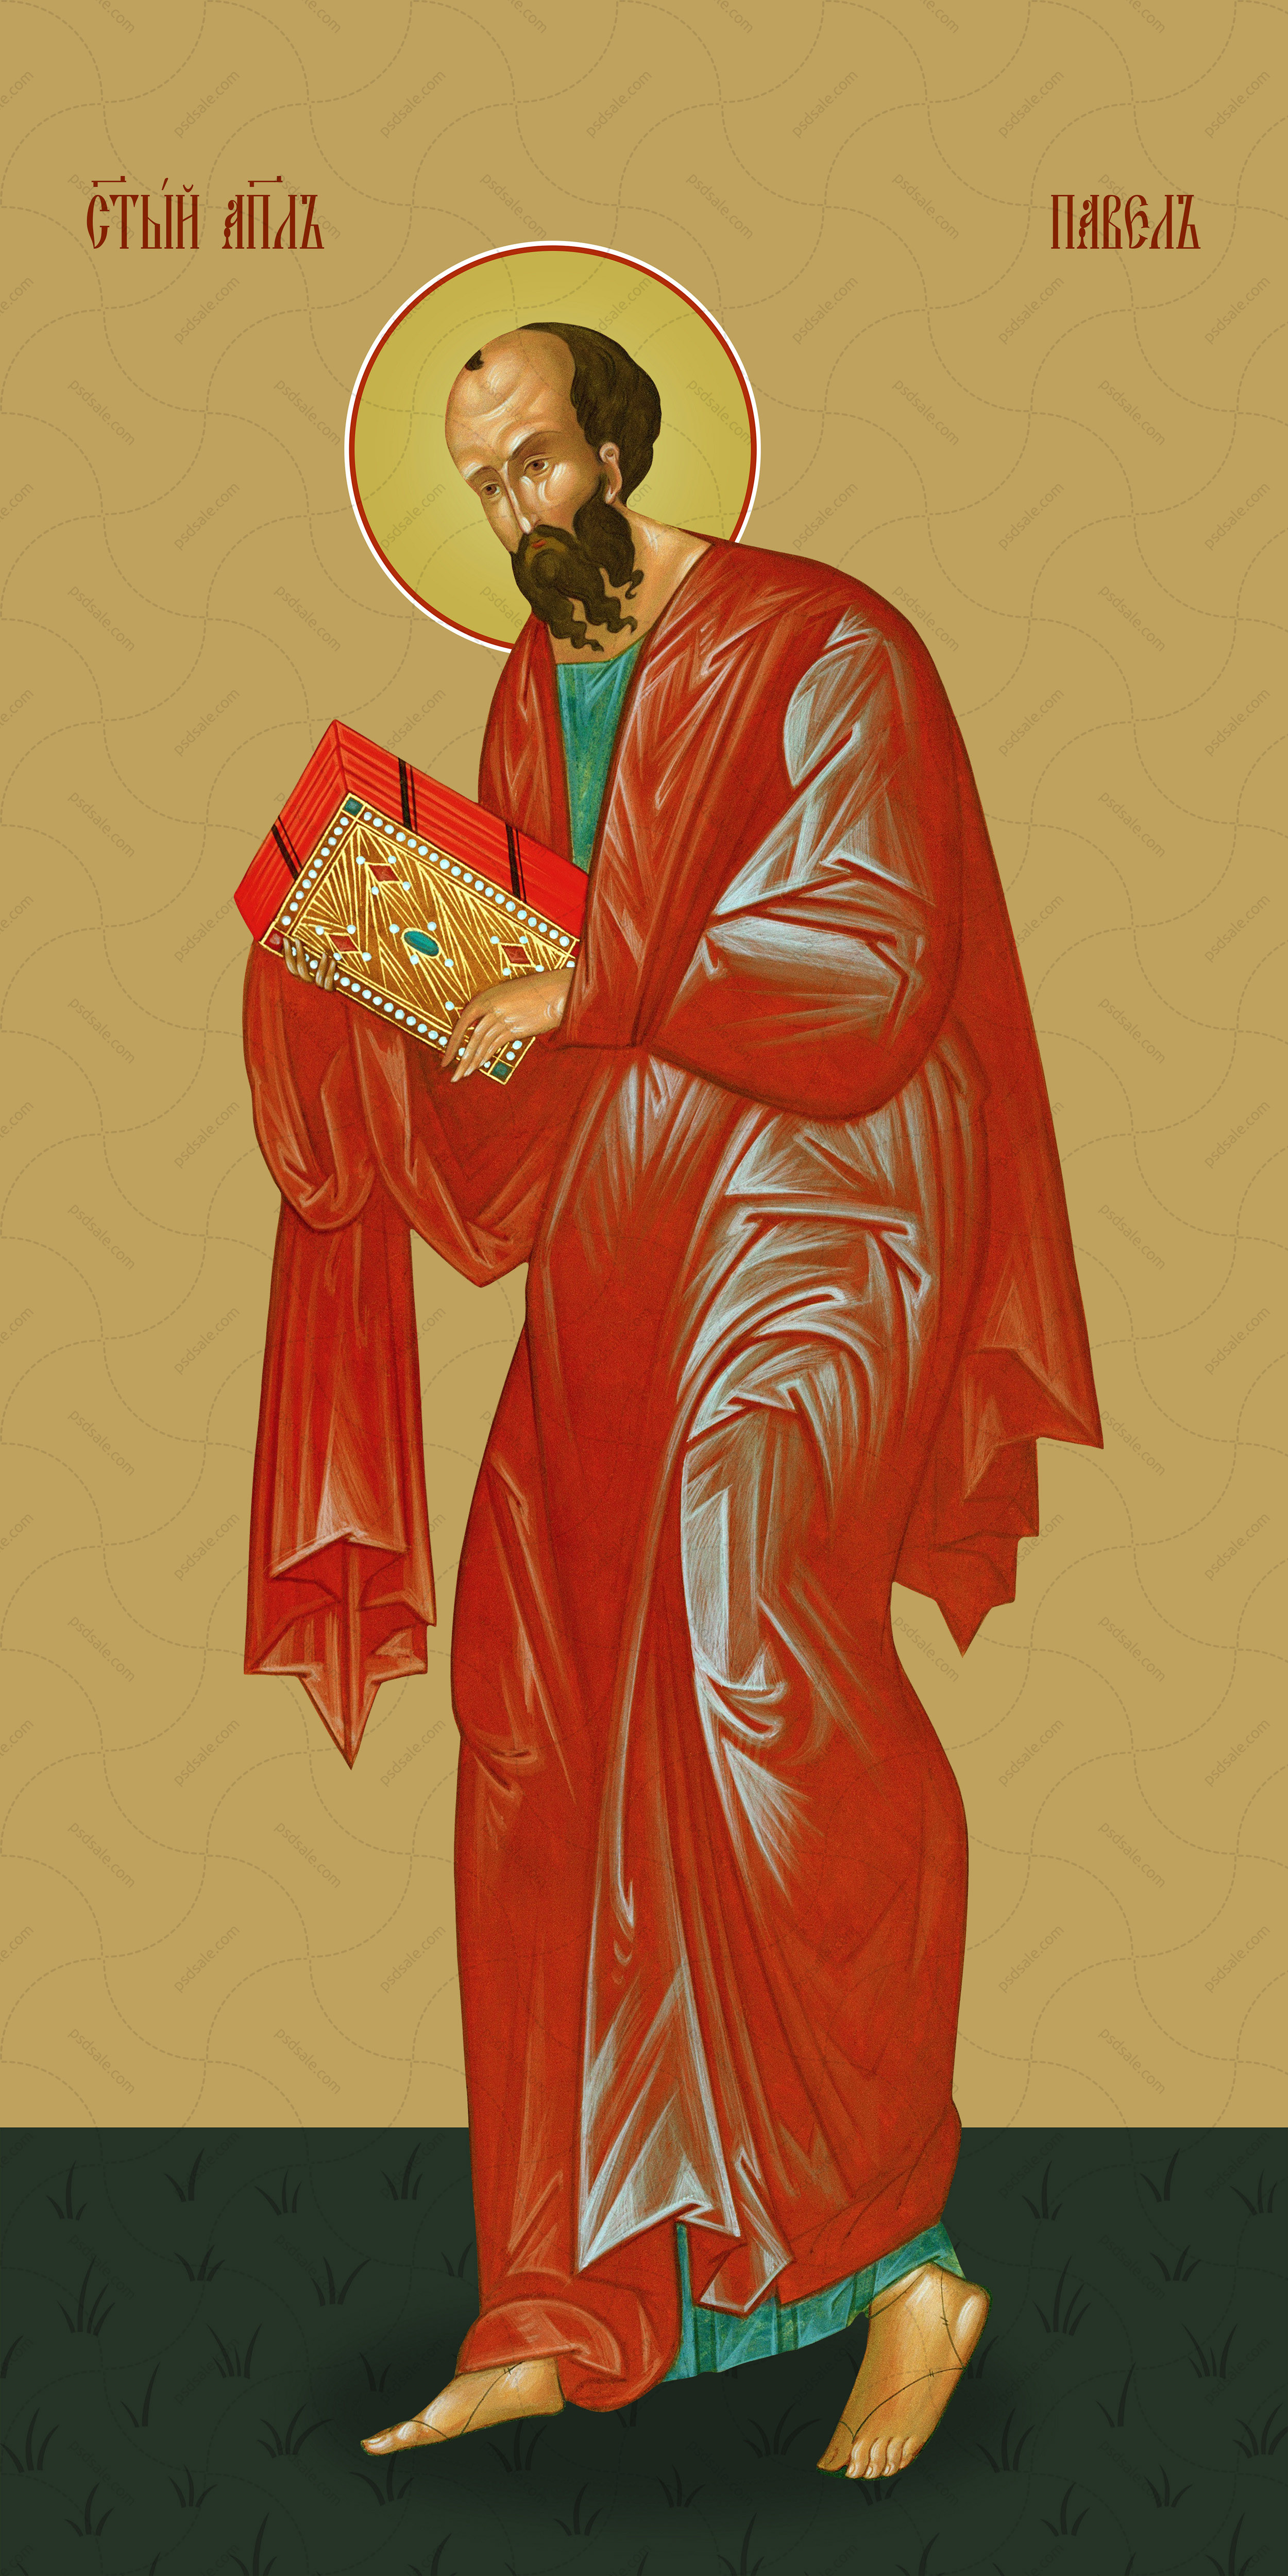 Мерная икона, Павел, святой апостол